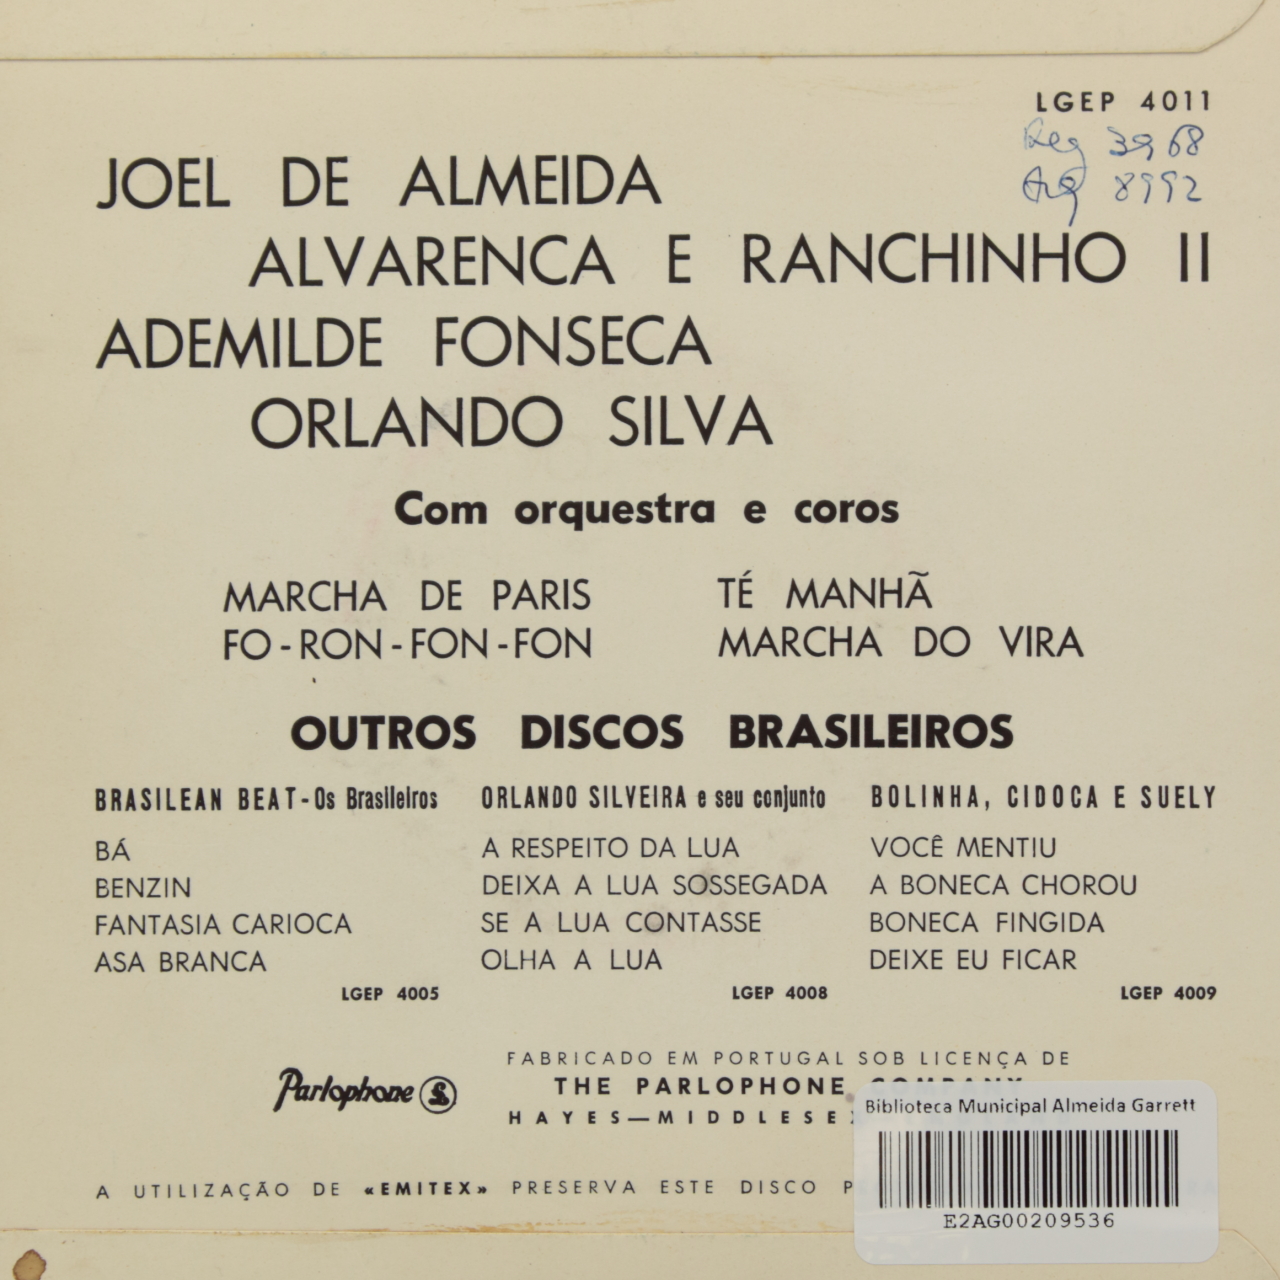 Joel de Almeida, Alvarenca e Ranchinho II, Ademilde Fonseca e Orlando Silva